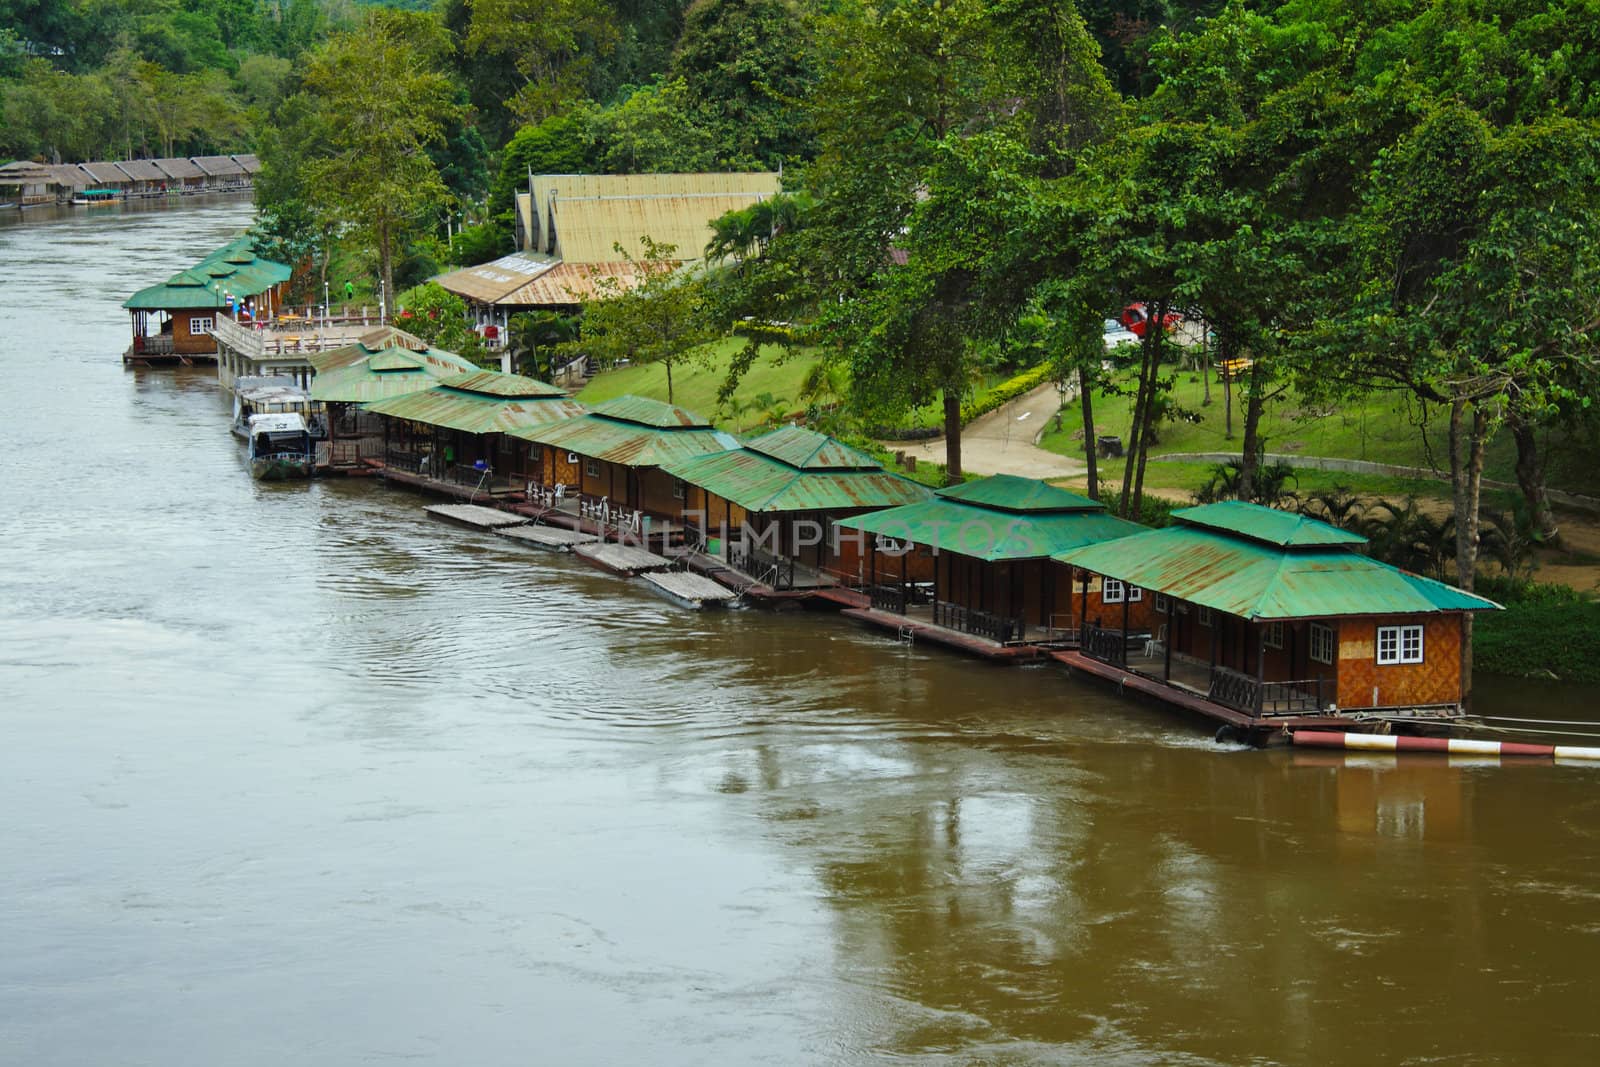 Thai village on the river